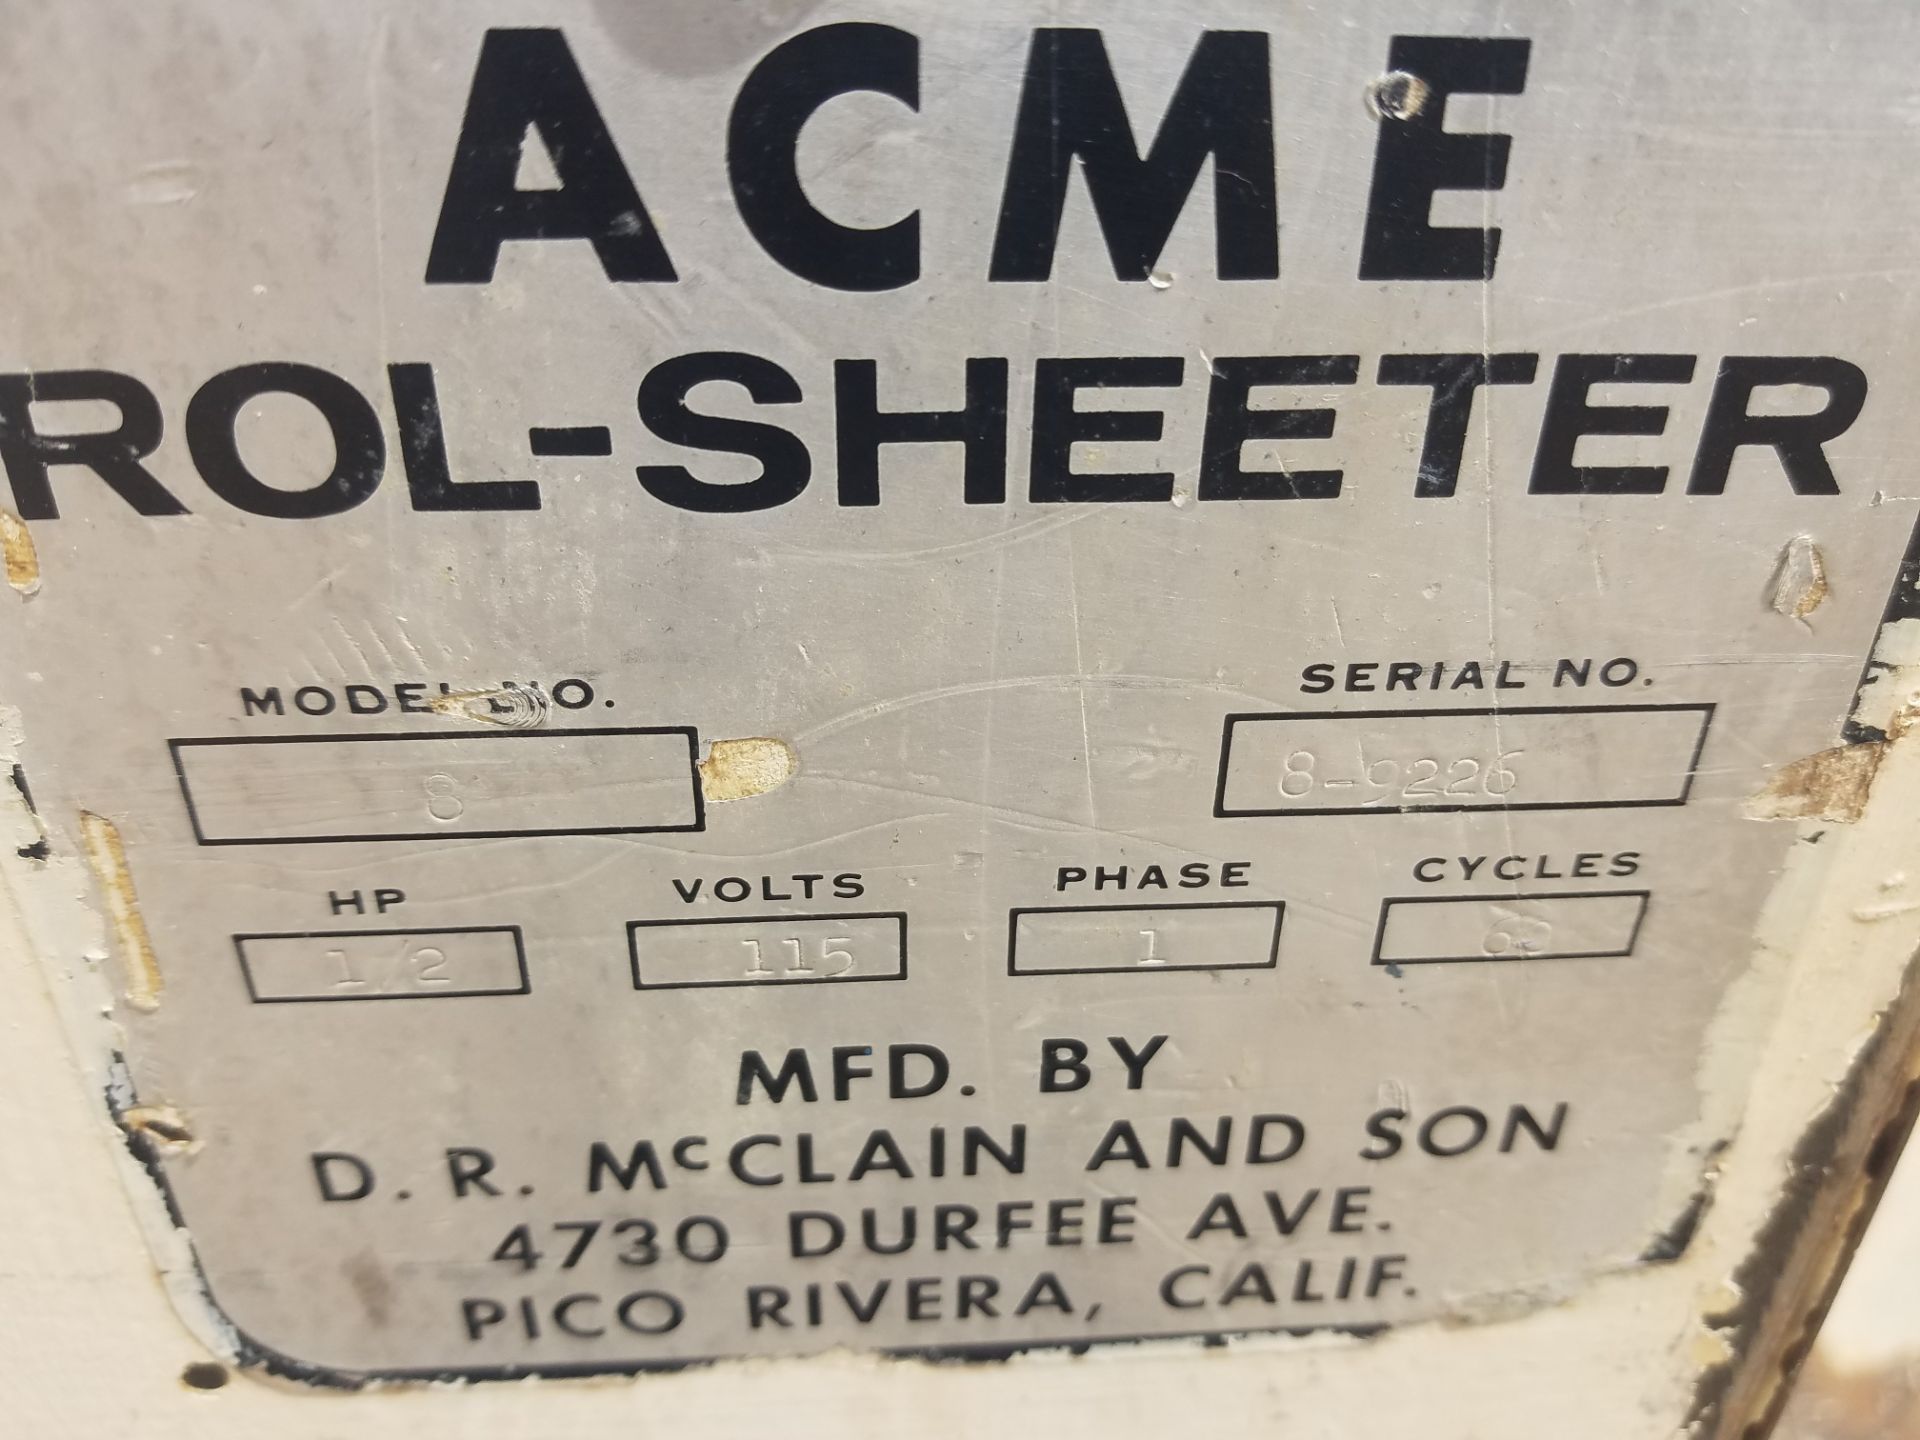 Acme 8-Rol-Sheeter, S/N 8-9226 with 19-1/2" Conveyor Belt, Volt 115 (Rigging, Loading & Site - Image 5 of 5